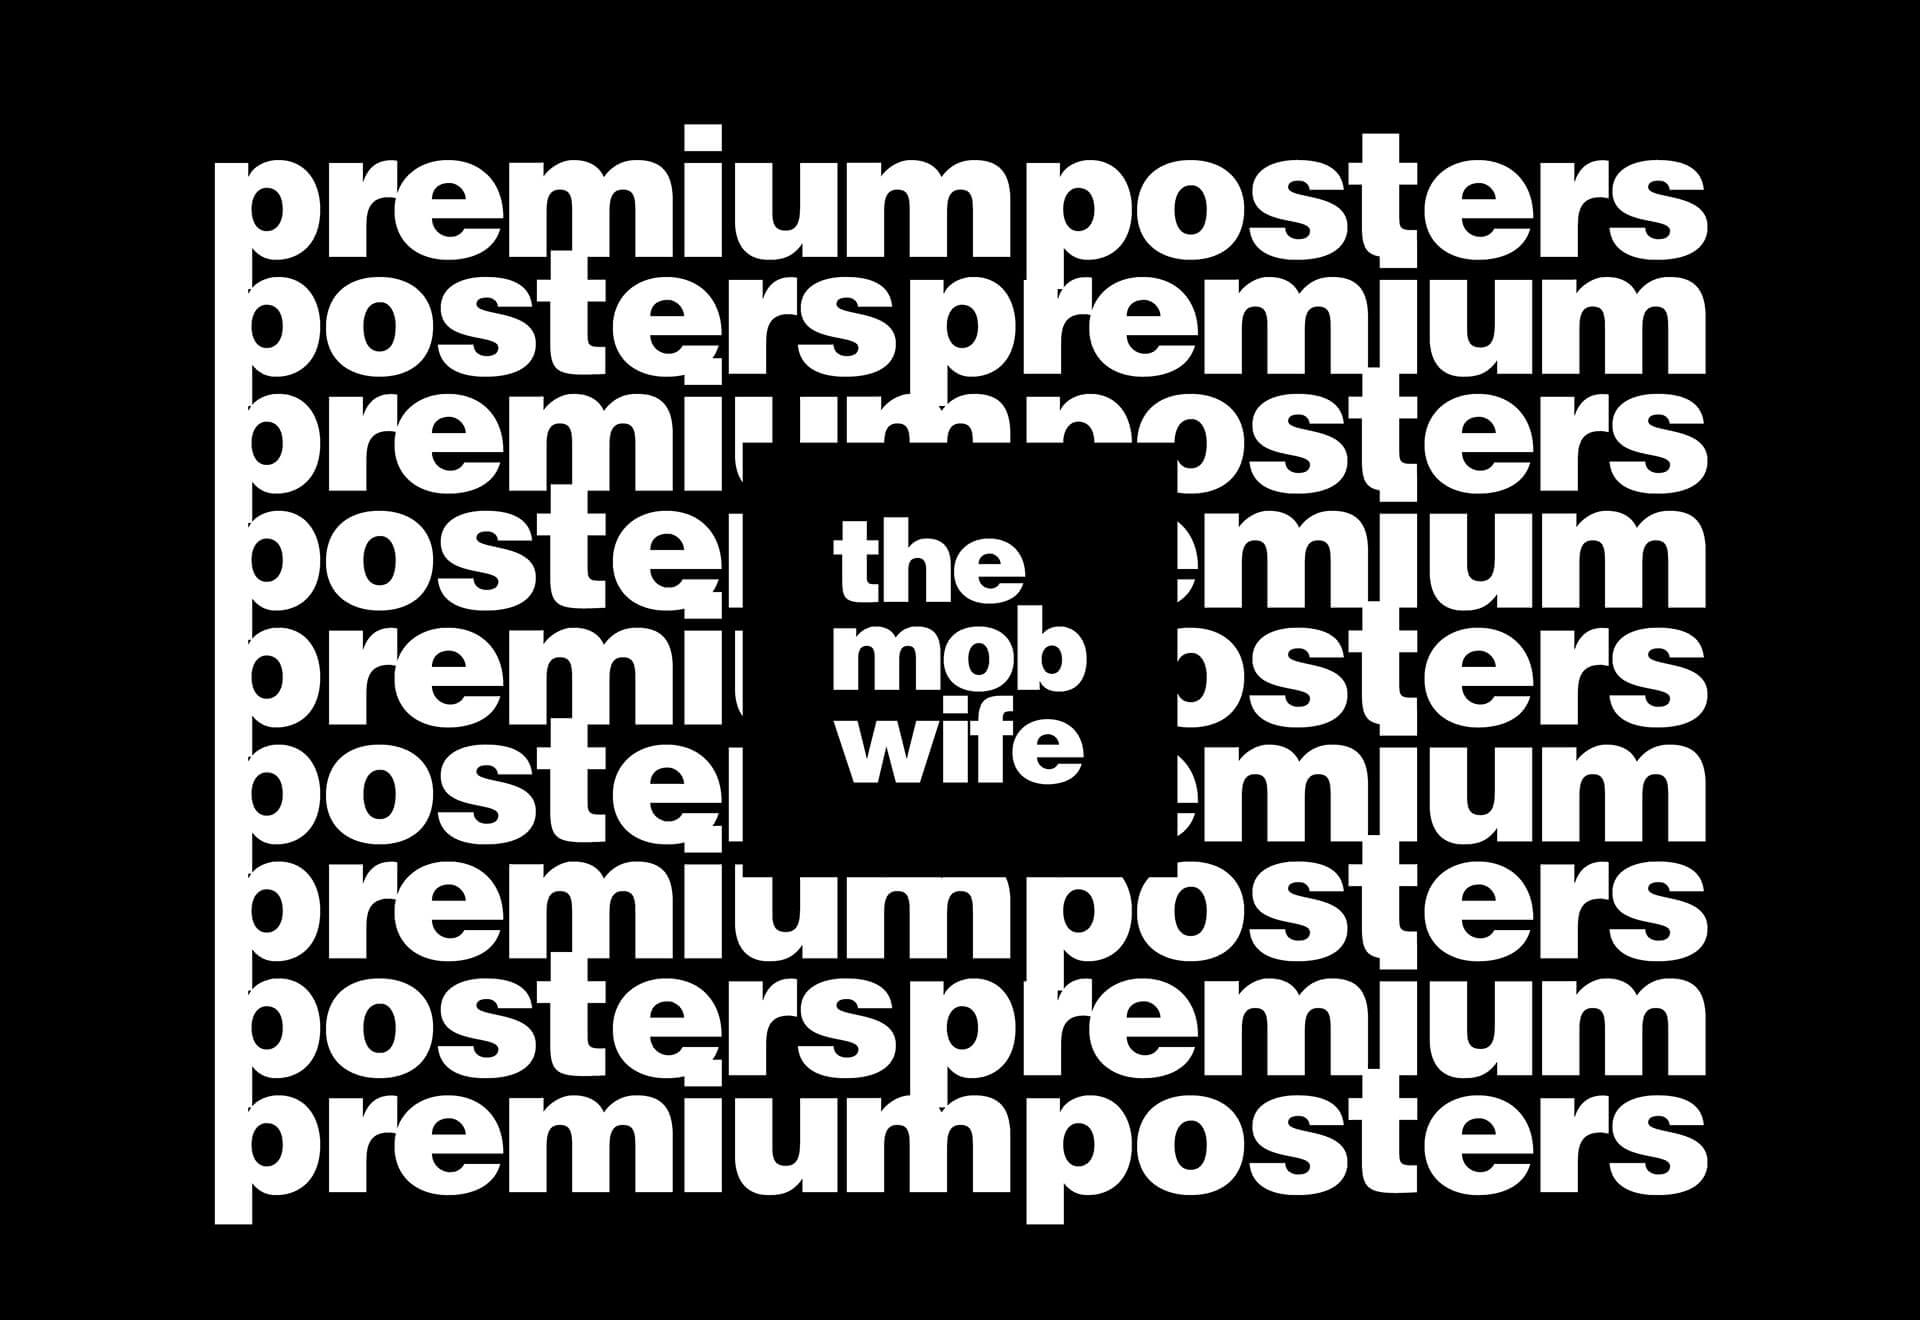 Every Gangster room deserve Mobster Premium Posters